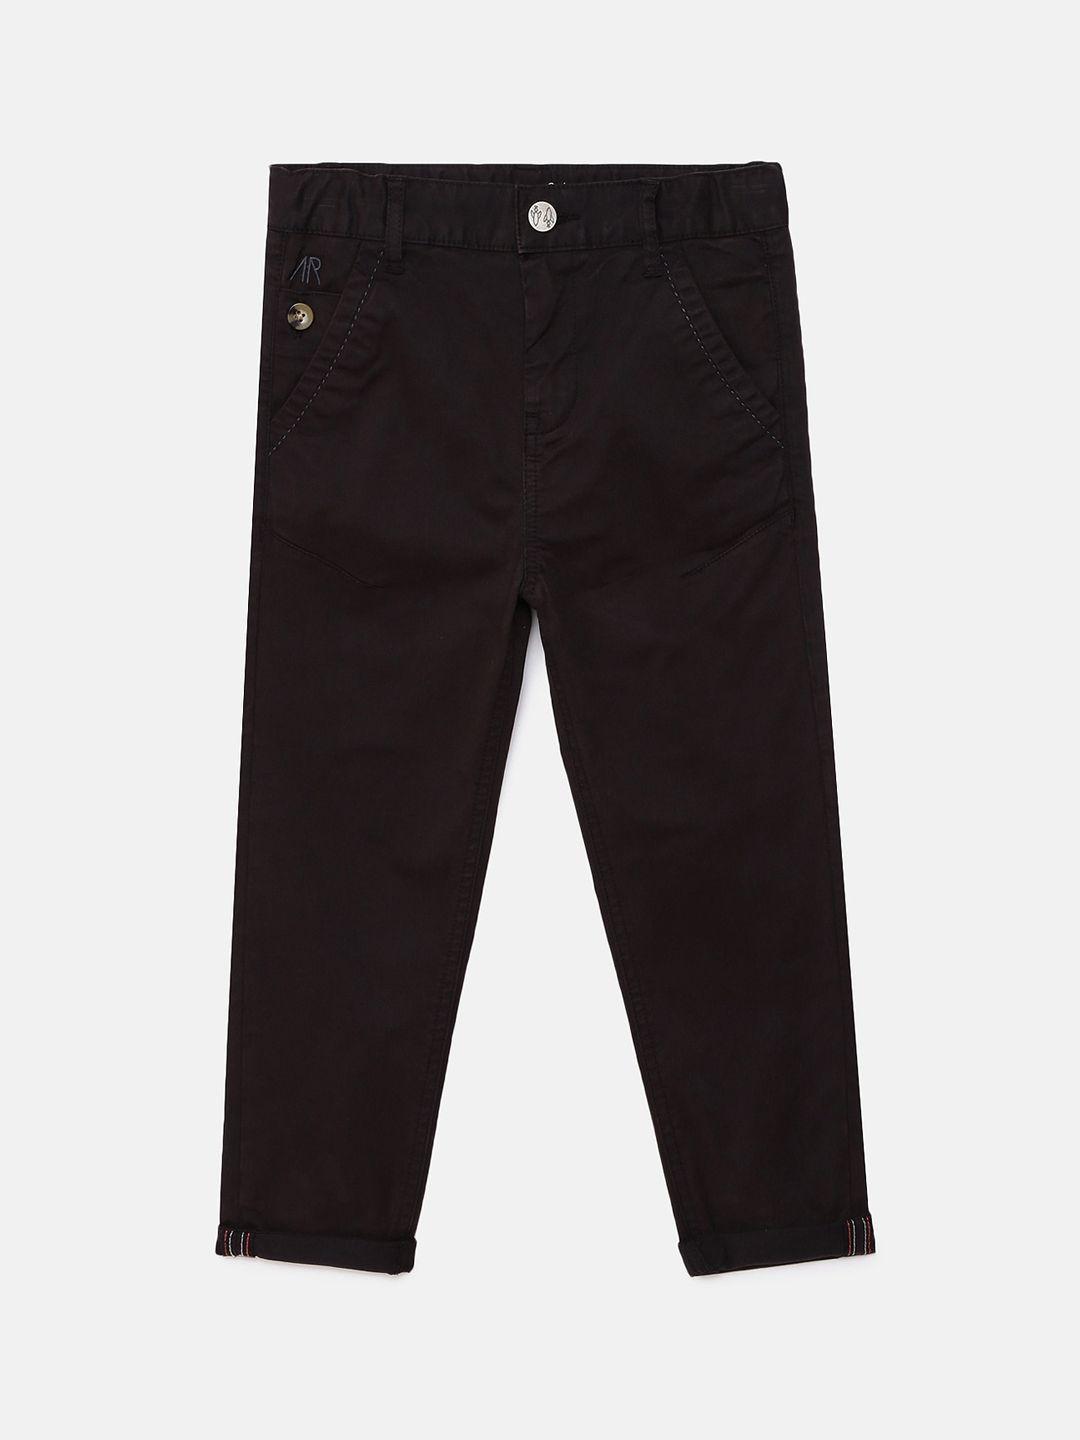 angel-&-rocket-boys-black-slim-fit-chinos-trousers